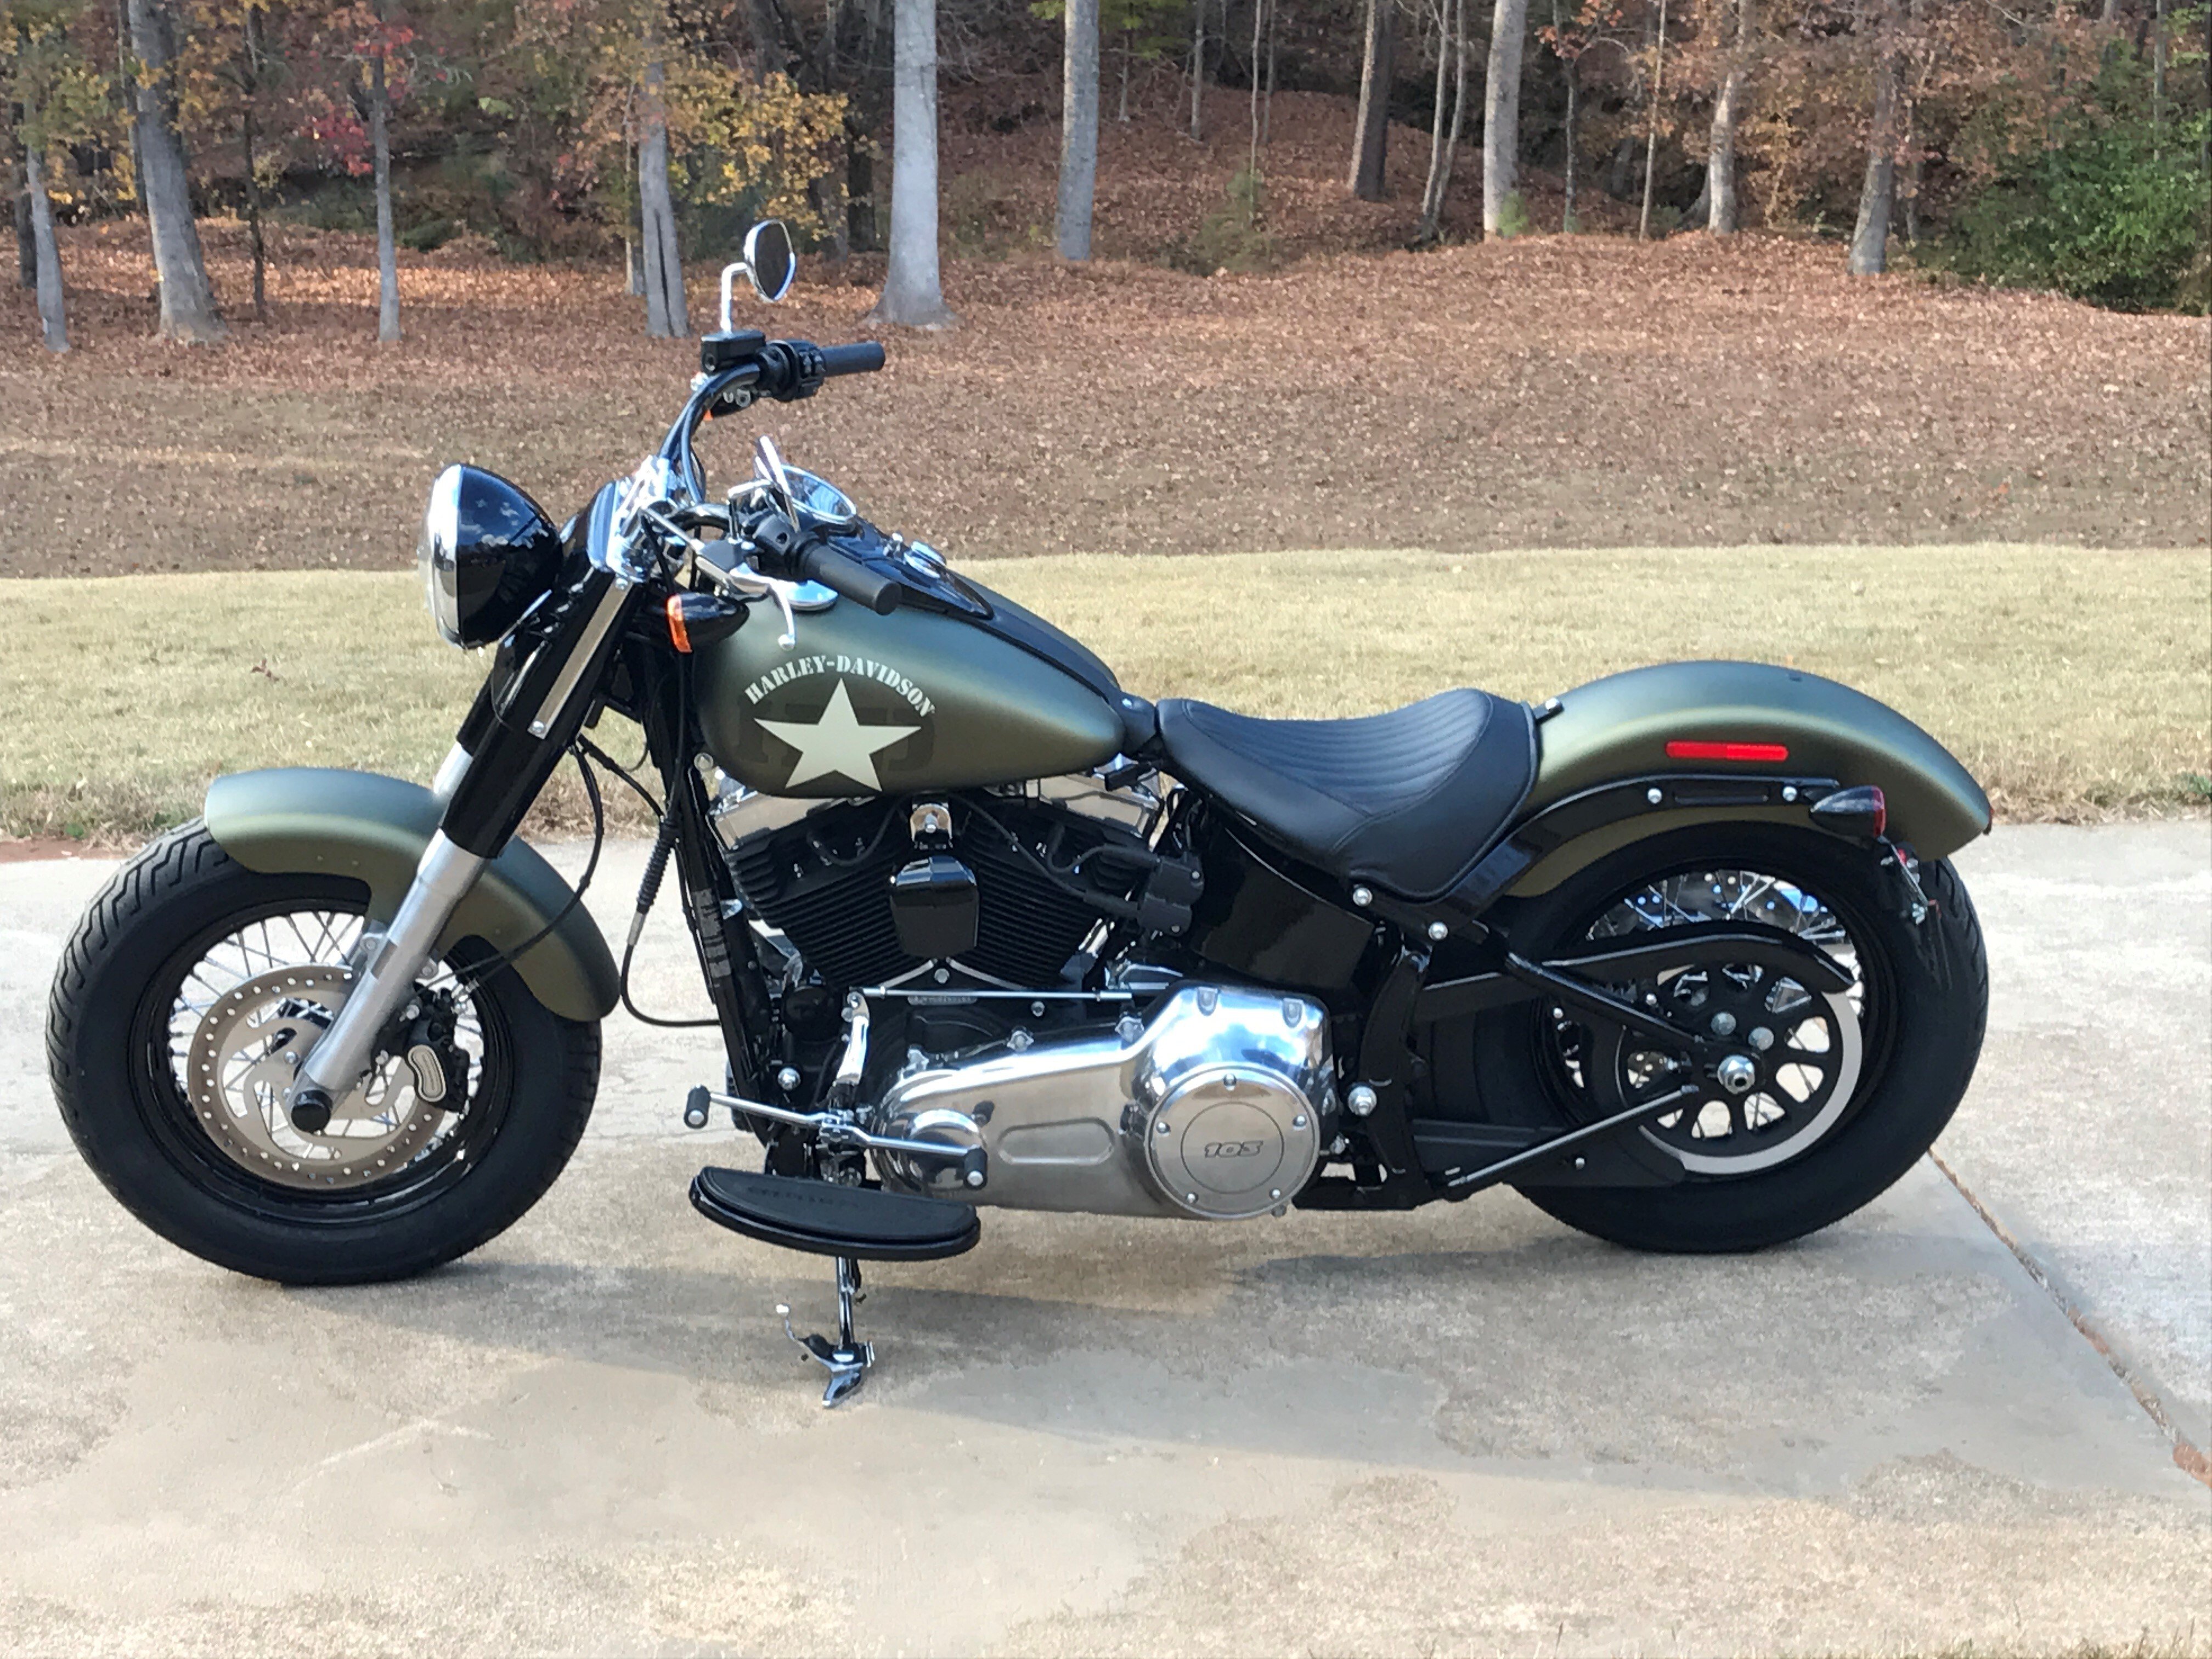 2016 Harley Davidson Softail Slim S For Sale Near Dalton Georgia 30720 Motorcycles On Autotrader